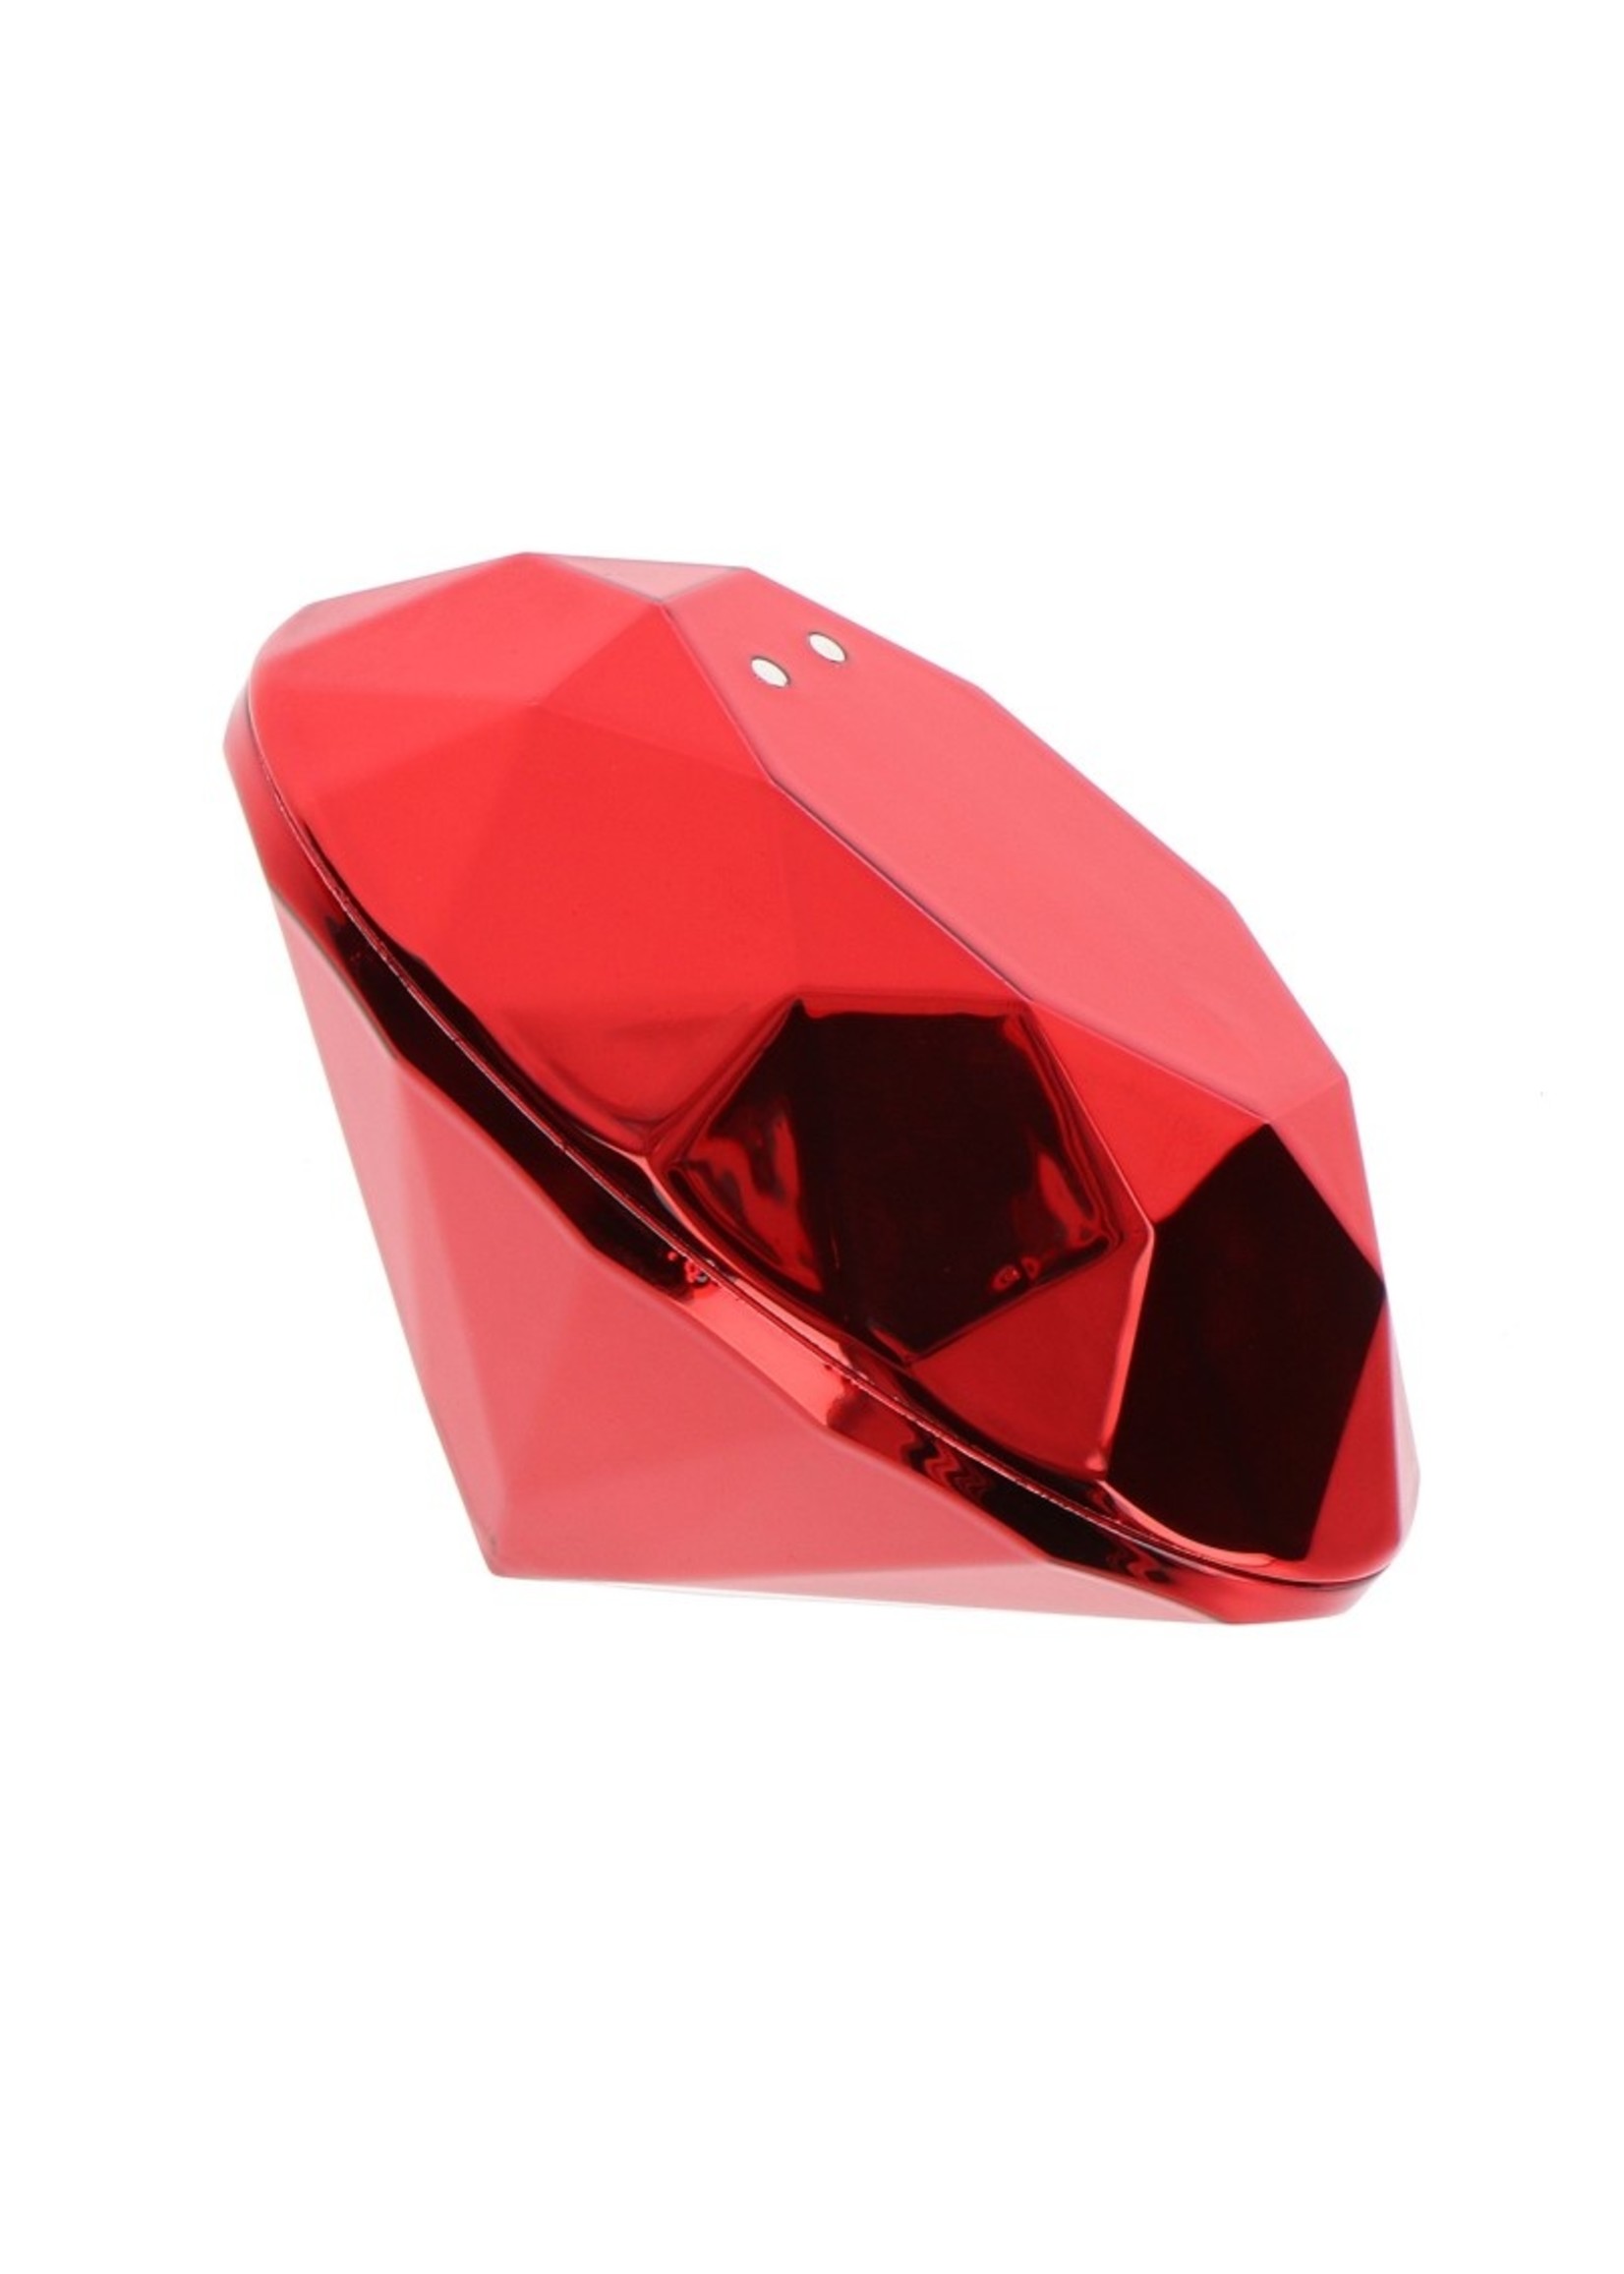 ToyJoy Ruby red diamond